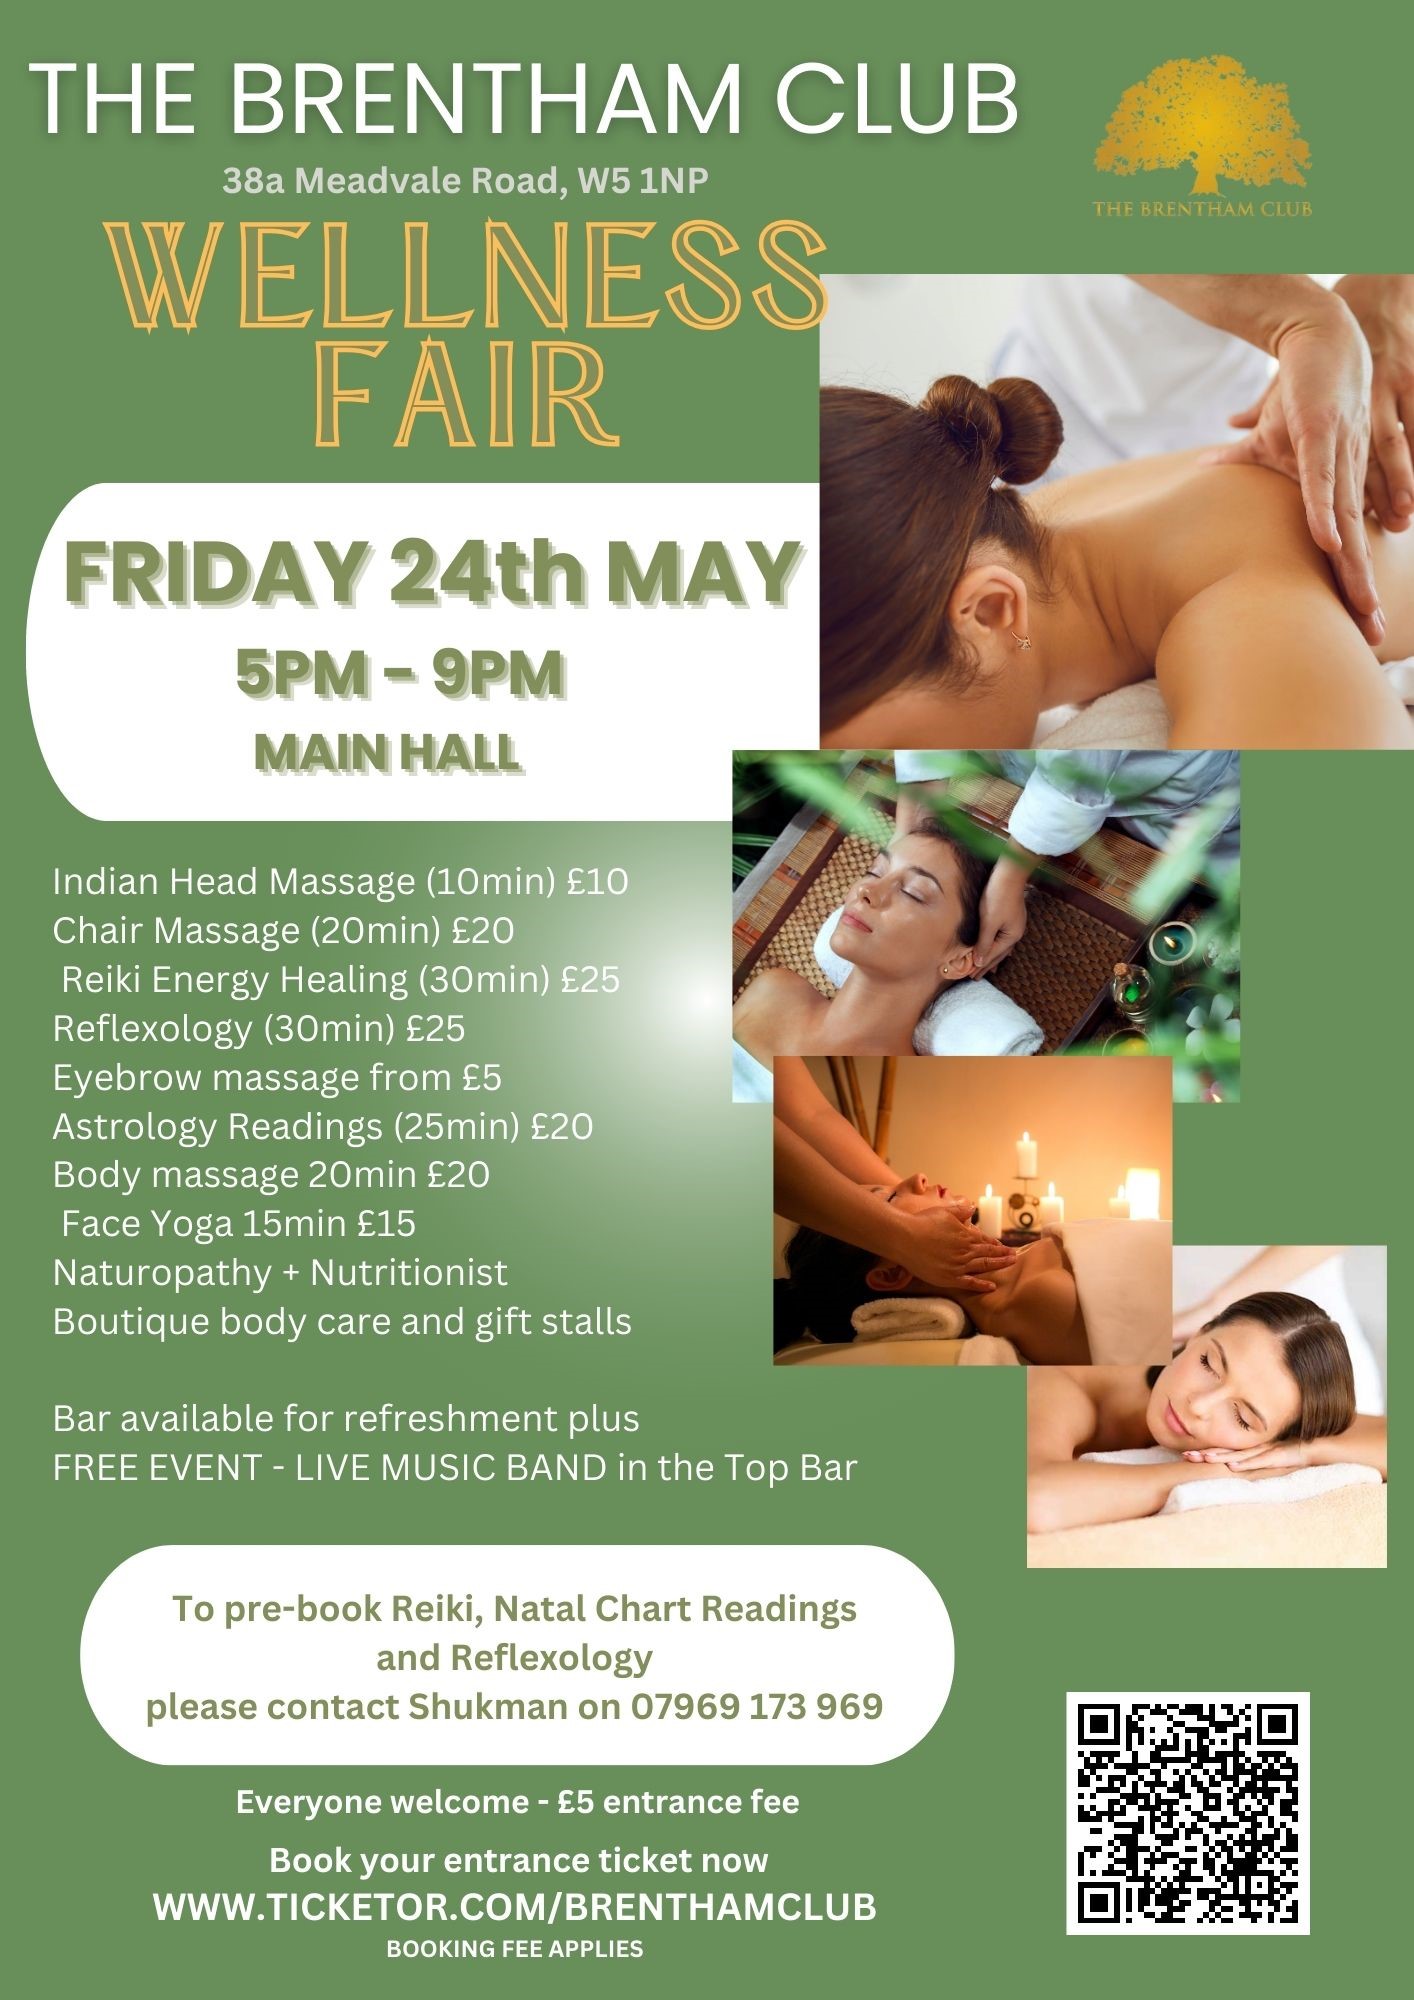 Wellness Fair  on may. 24, 17:00@The Brentham Club - Compra entradas y obtén información enBrenthamclub.co.uk 